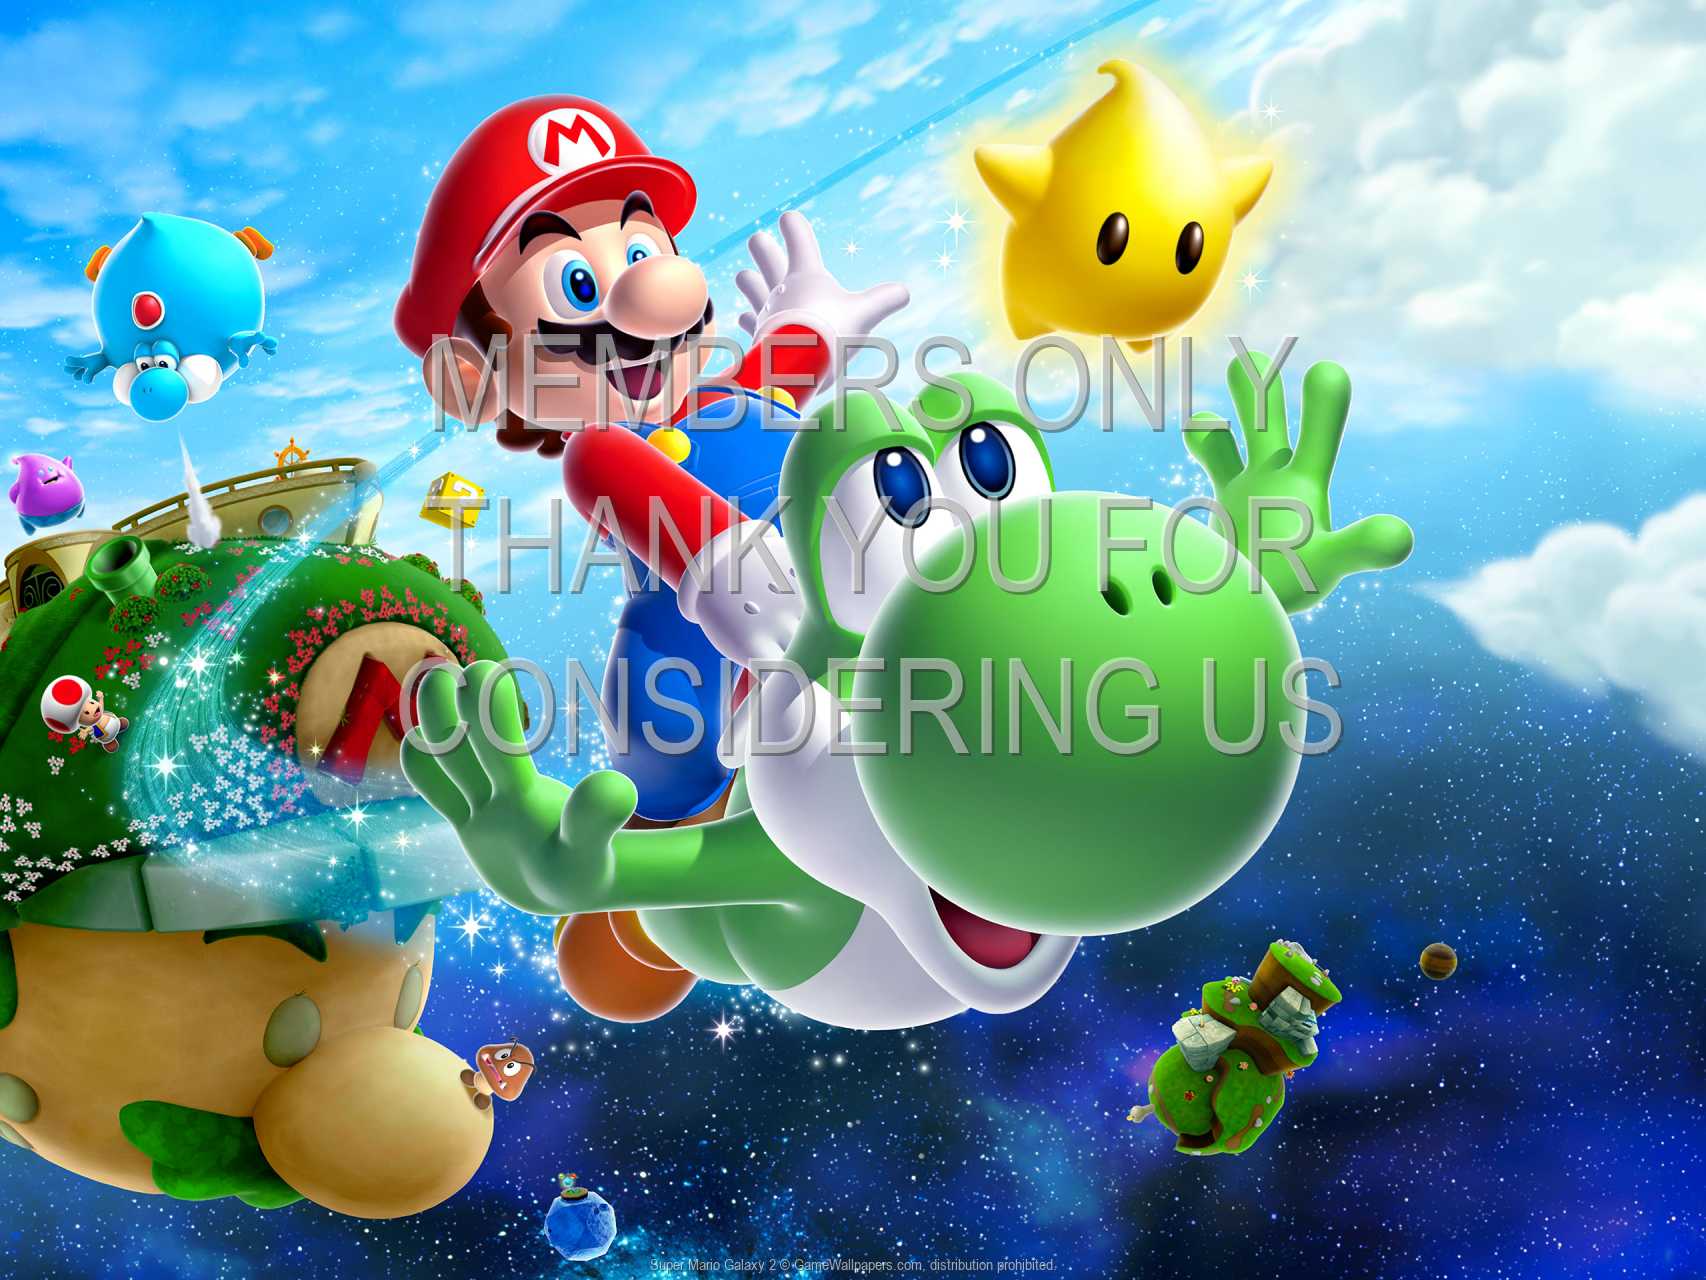 Super Mario Galaxy 2 720p Horizontal Mobile wallpaper or background 01